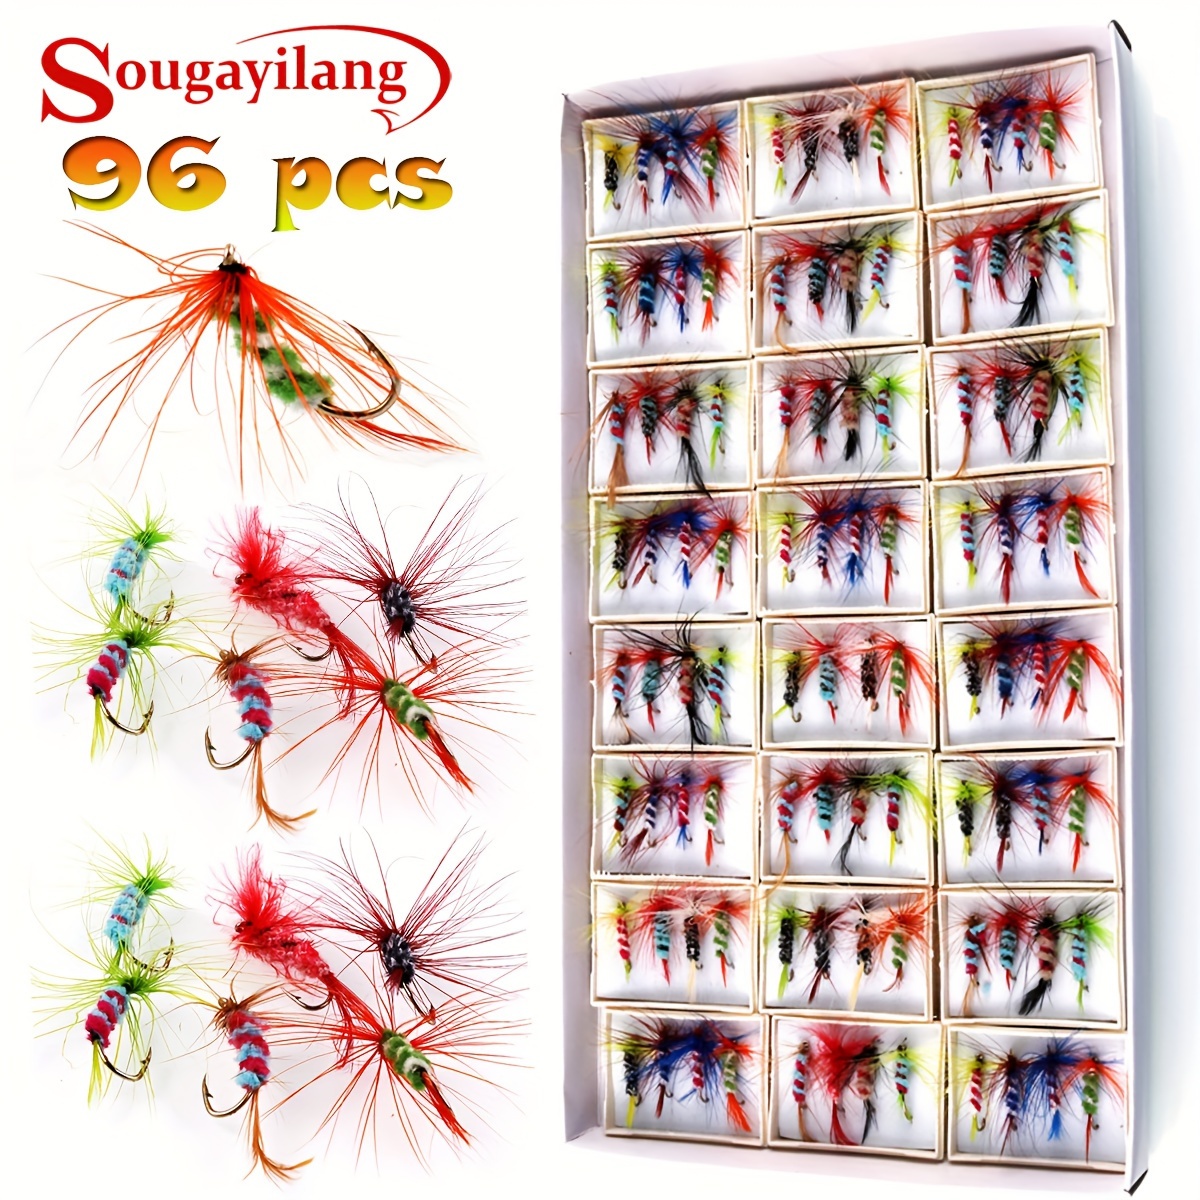 Sougayilang 96pcs Fishing Flies Set, Dry Fly, Scud, Nymph For Trout,  Grayling, Panfish, Carp Lures (Random Color)